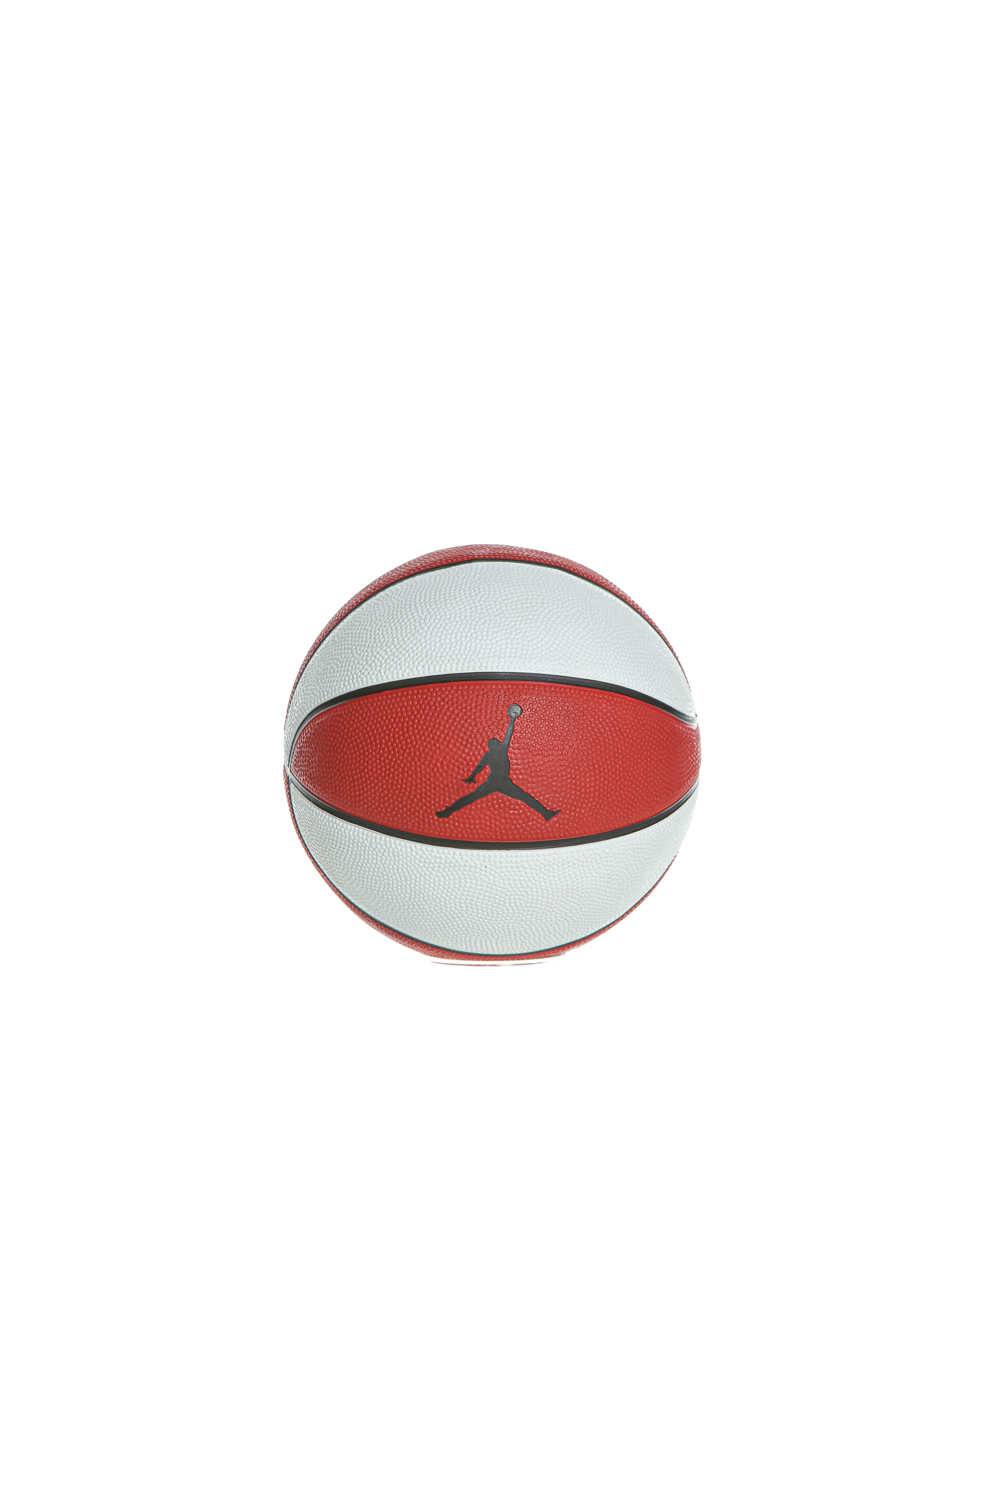 NIKE – Μπαλα basketball ΝΙΚΕ JORDAN SKILLS κοκκινη λευκη